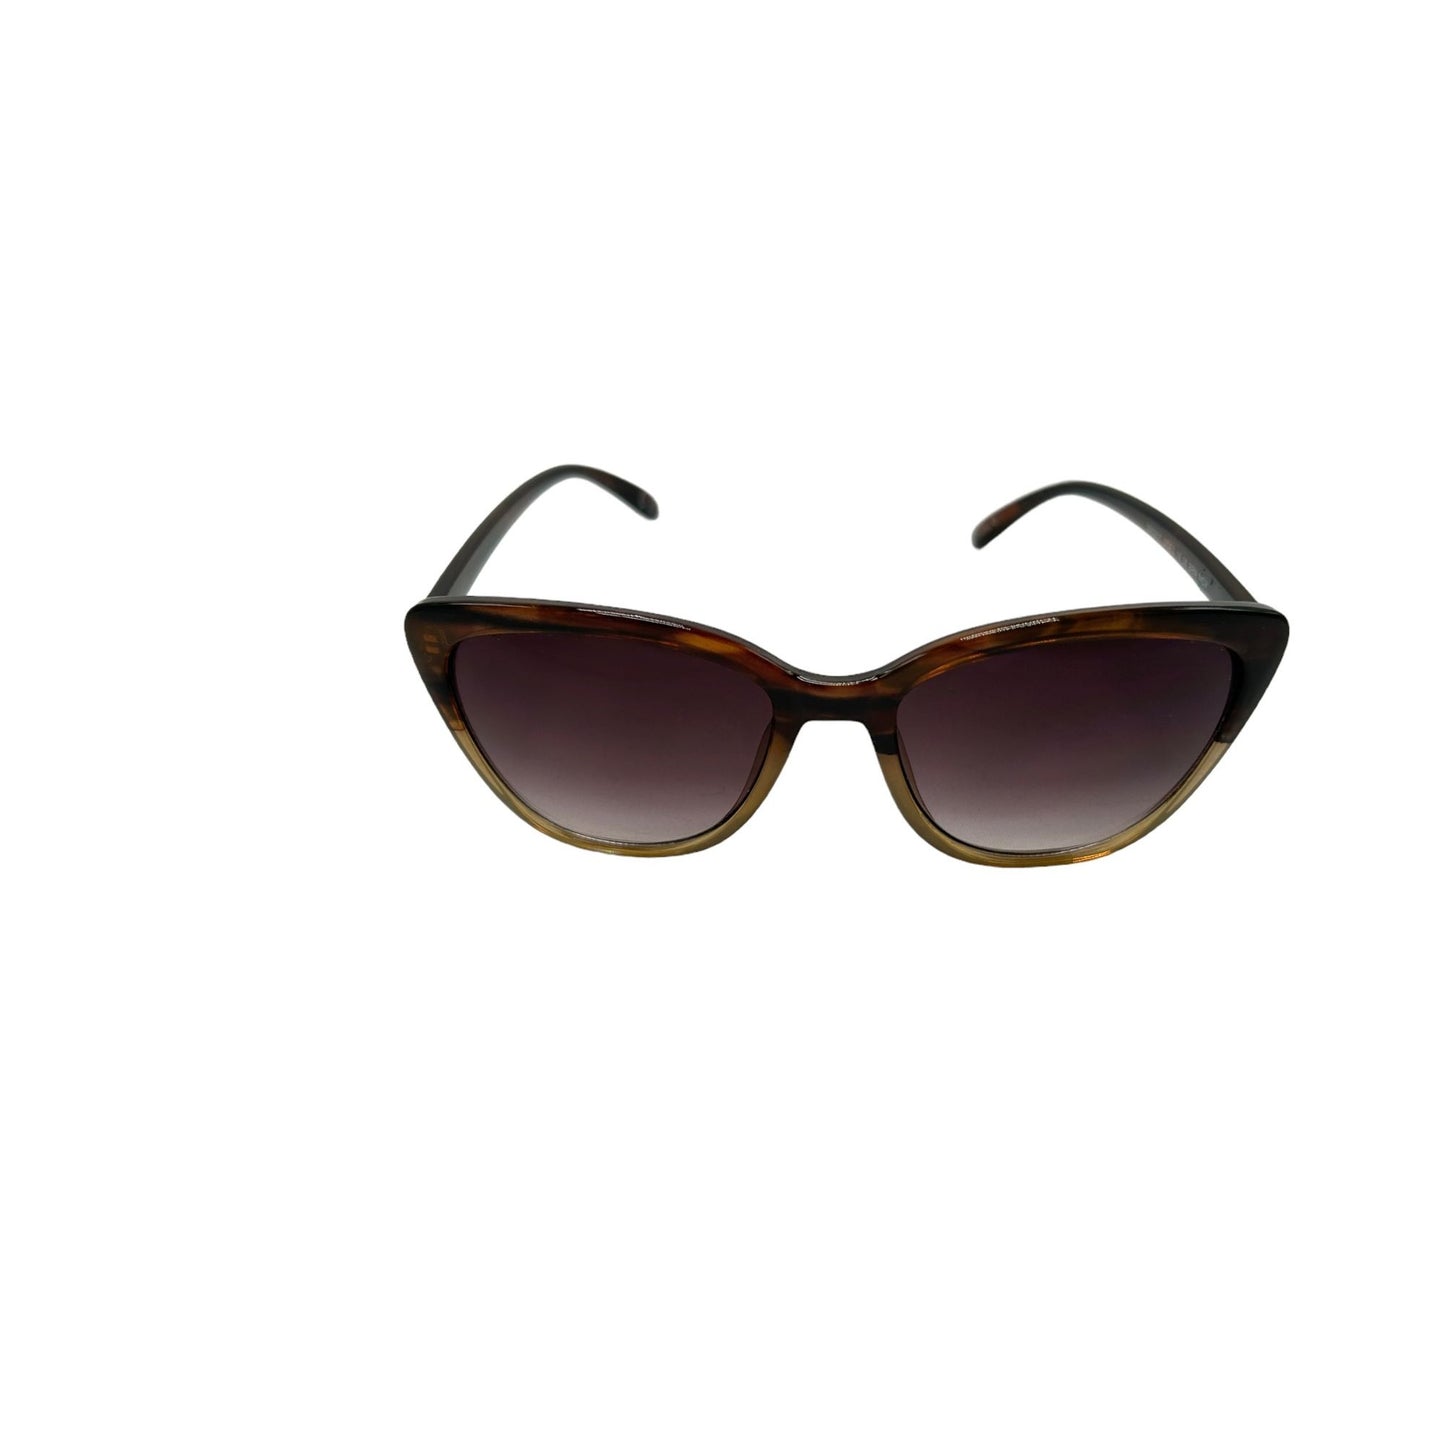 Surge Womens Tortoiseshell Effect Cat Eye Sunglasses Slim Arms Outdoor